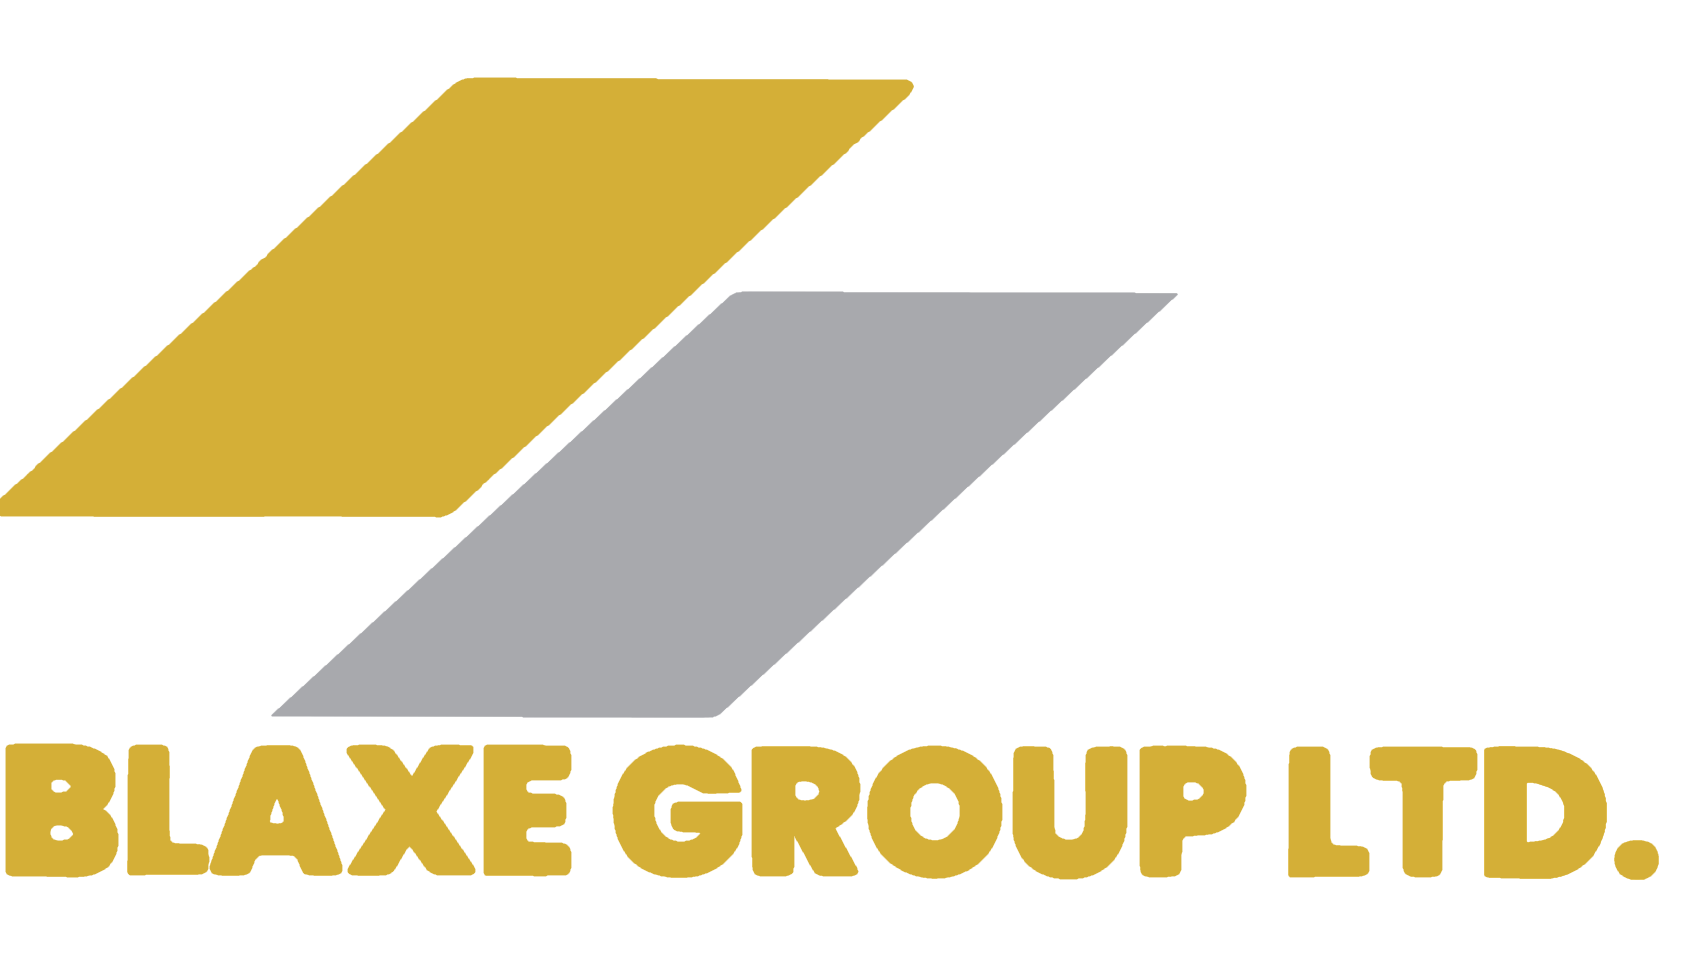 Blaxe Group Ltd.